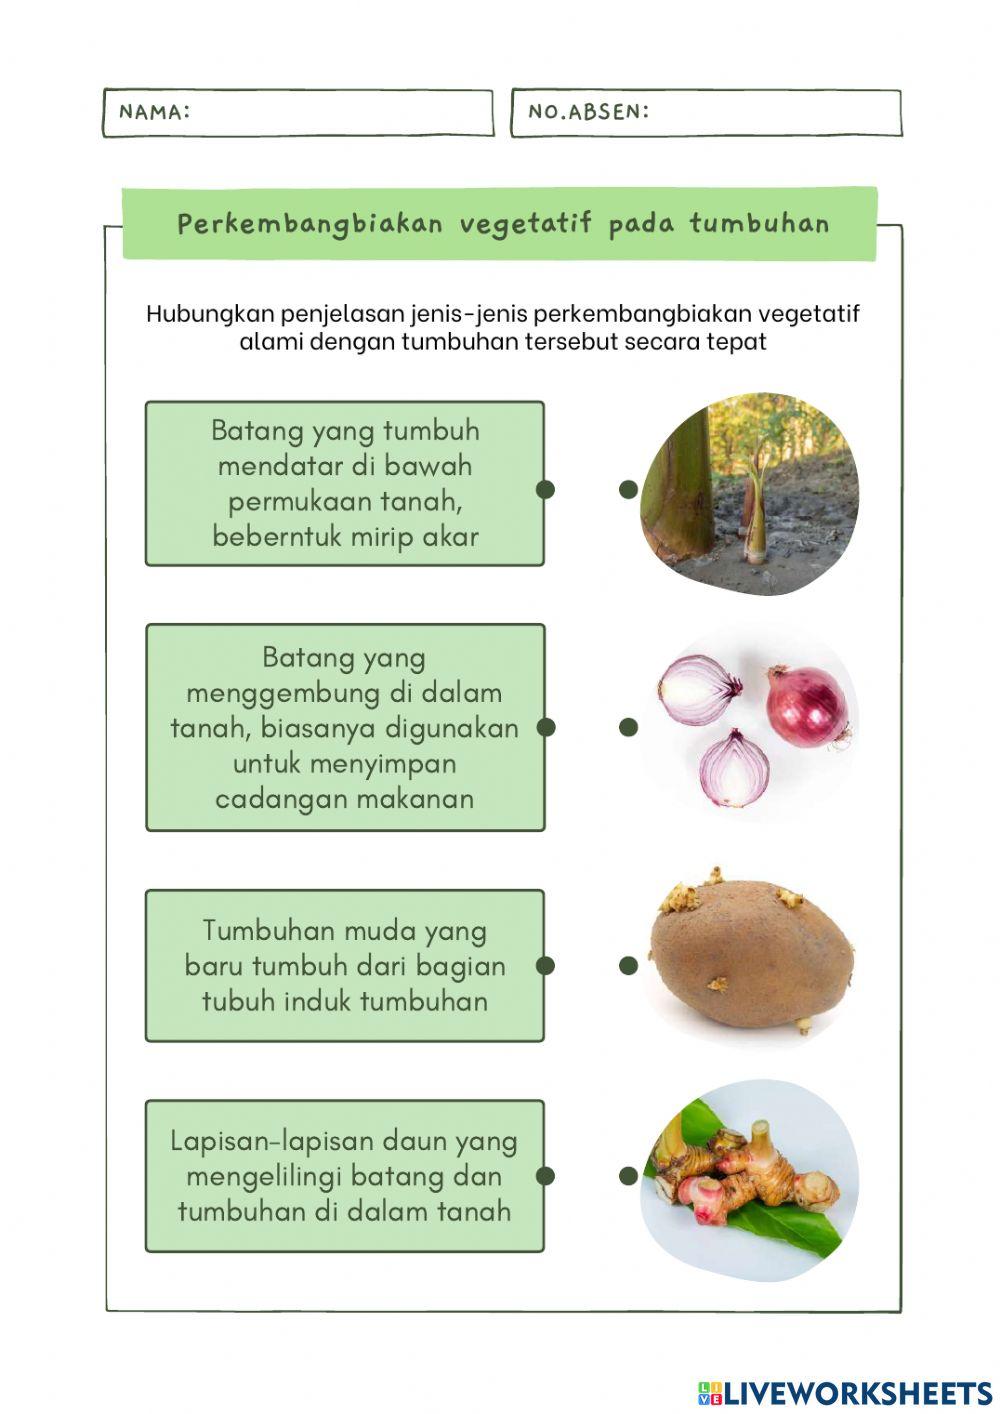 LKPM Perkembangbiakan Vegetatif Tumbuhan Angiospermae